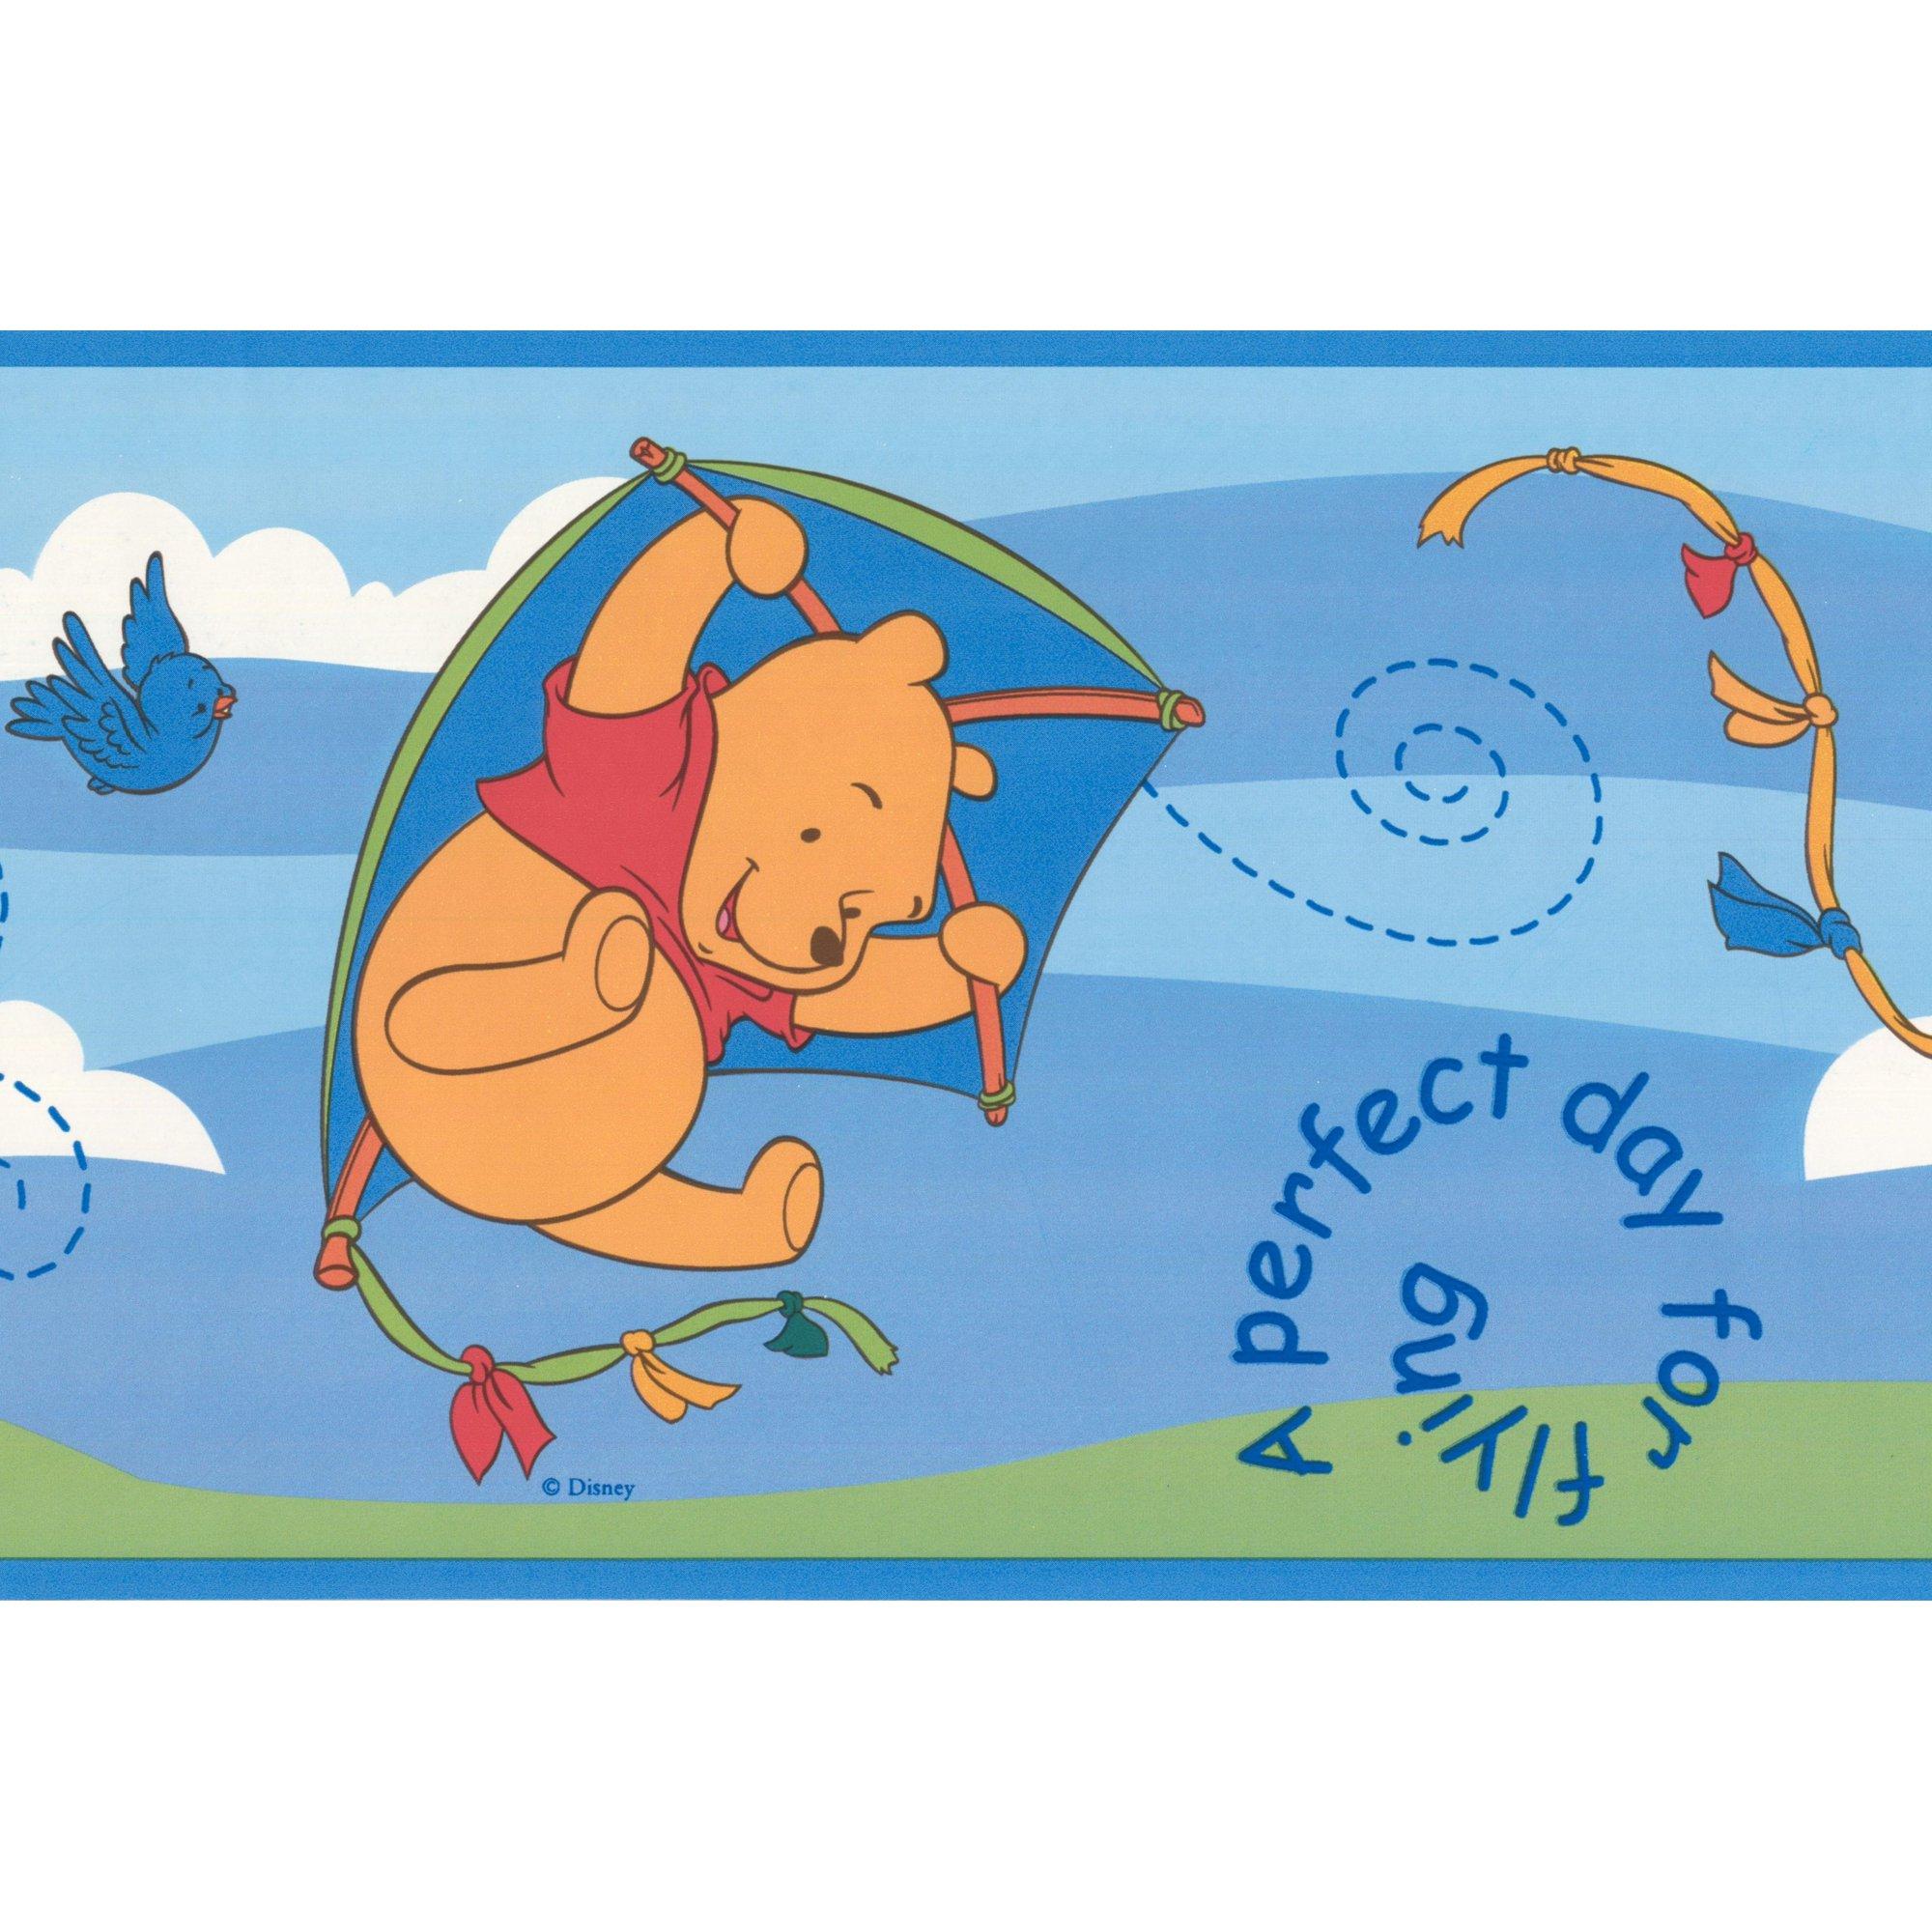 Tiger Winnie the Pooh Disney Cartoon Wallpaper Border